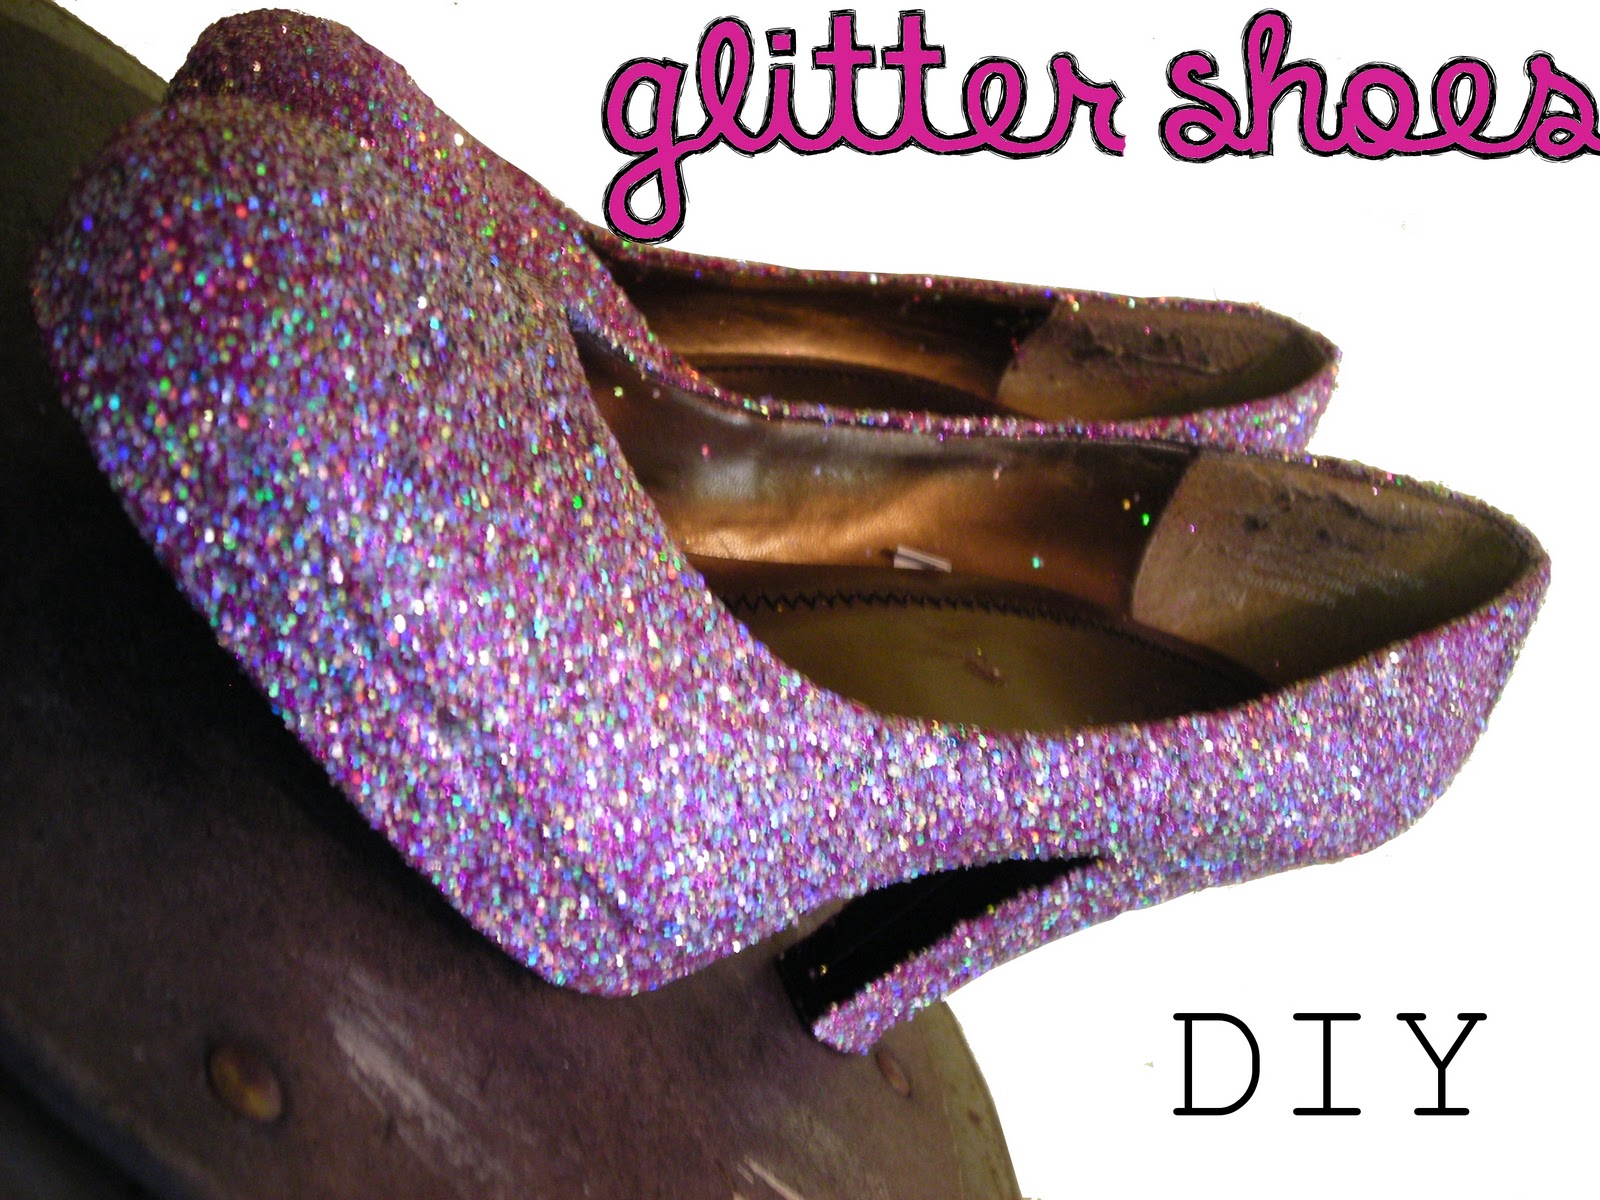 she hearts art: glitter shoes: diy